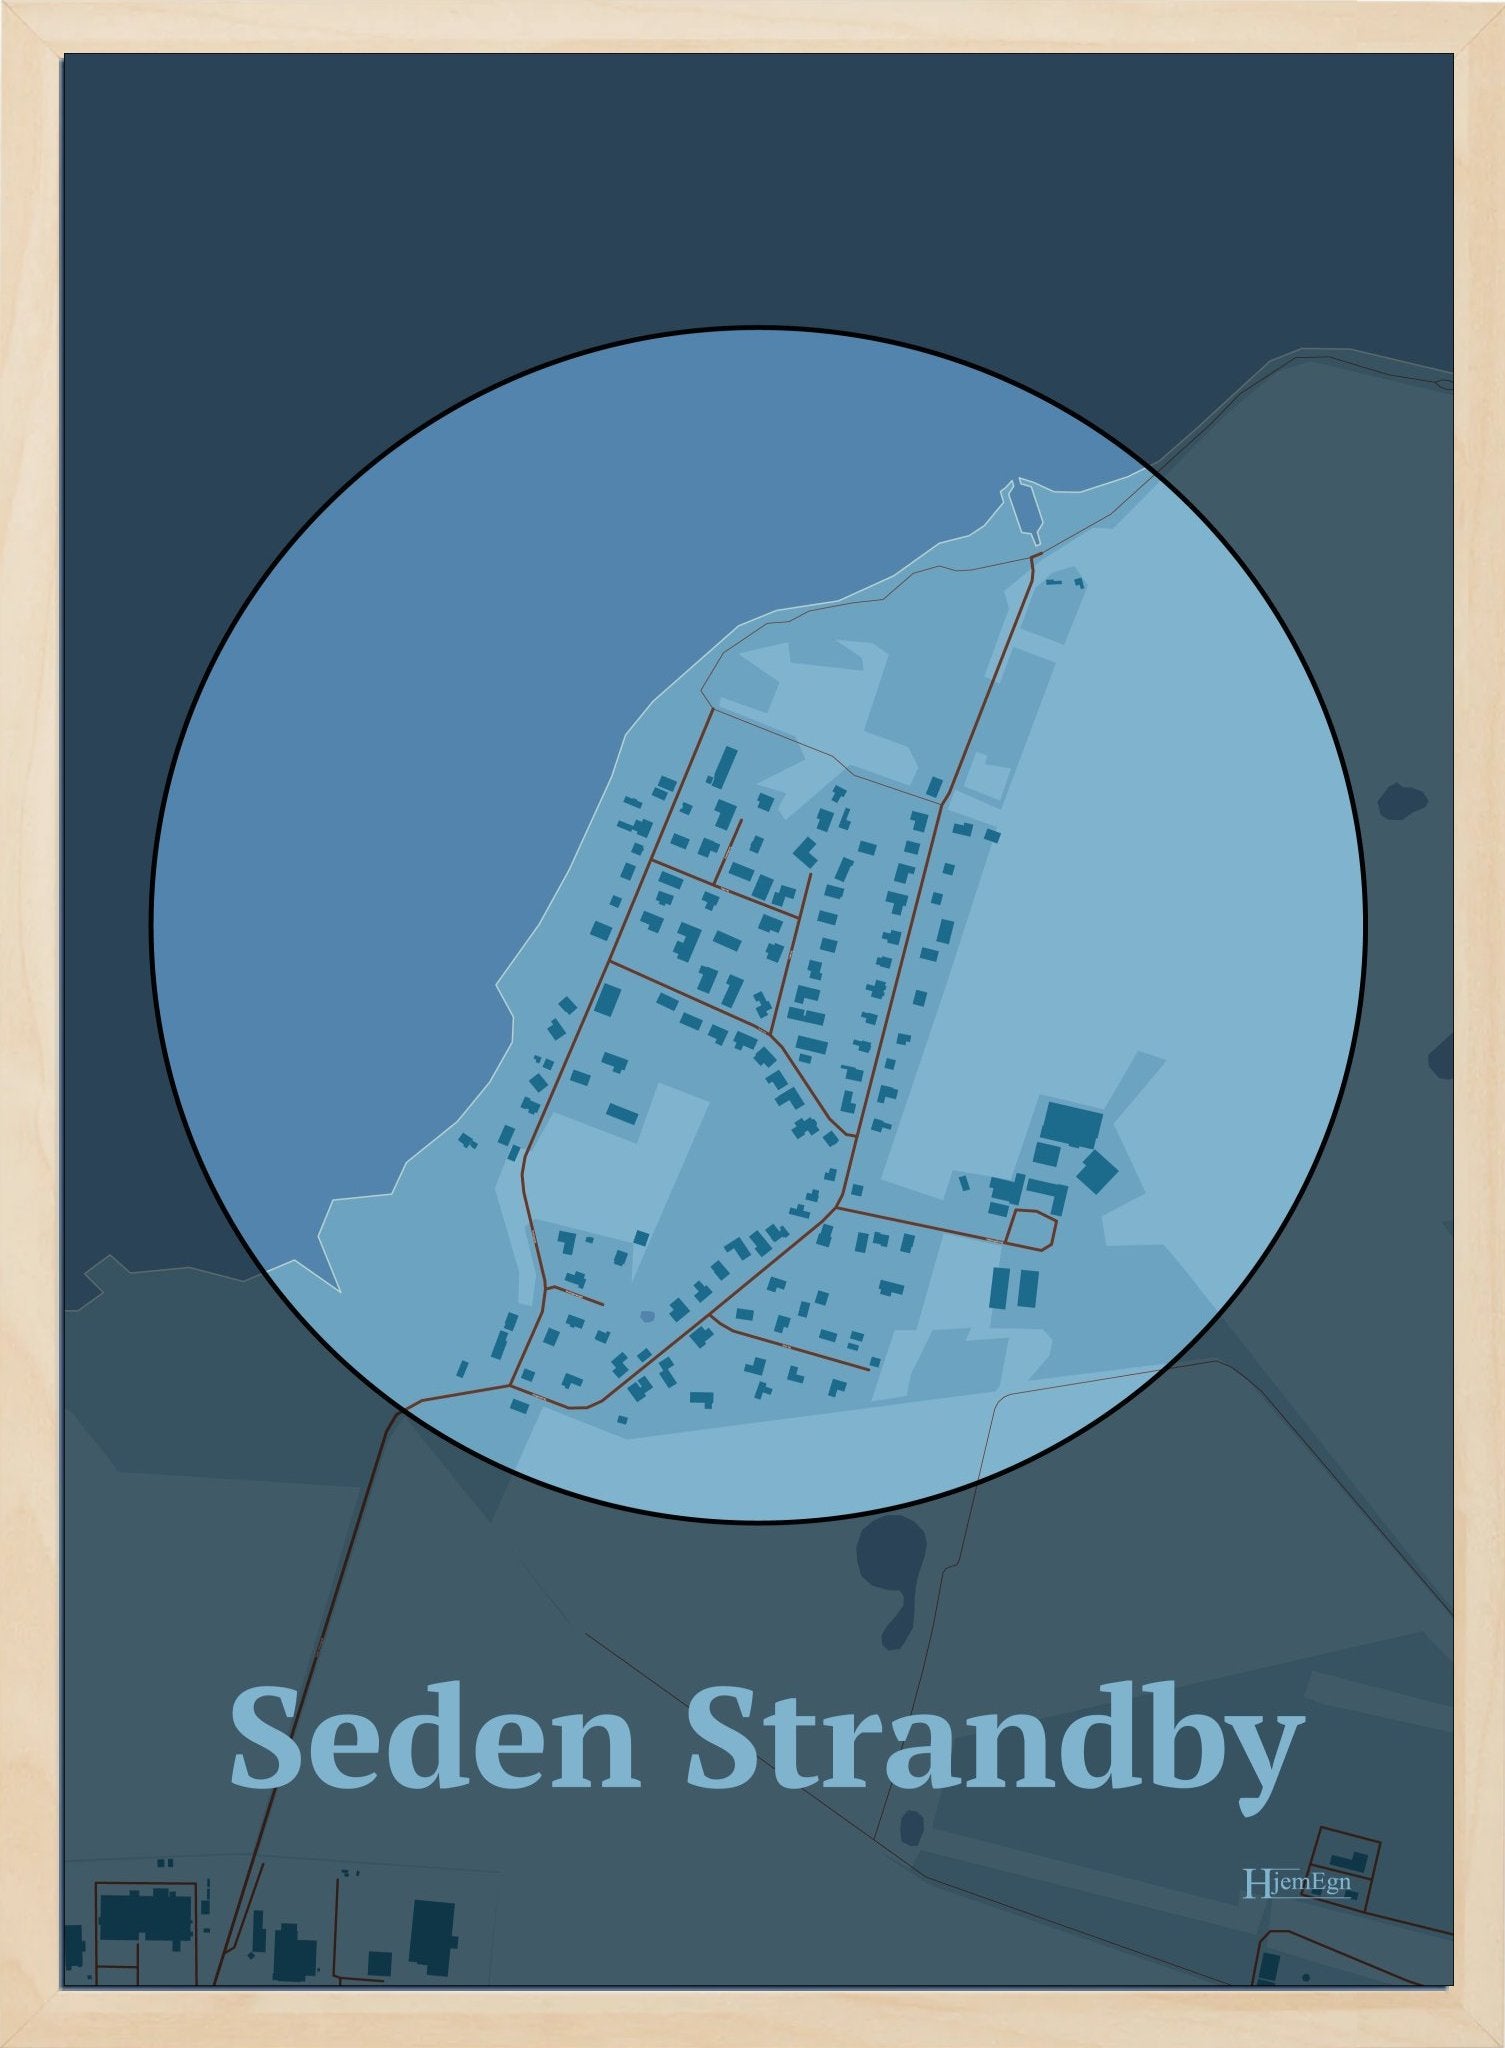 Seden Strandby plakat i farve pastel blå og HjemEgn.dk design centrum. Design bykort for Seden Strandby